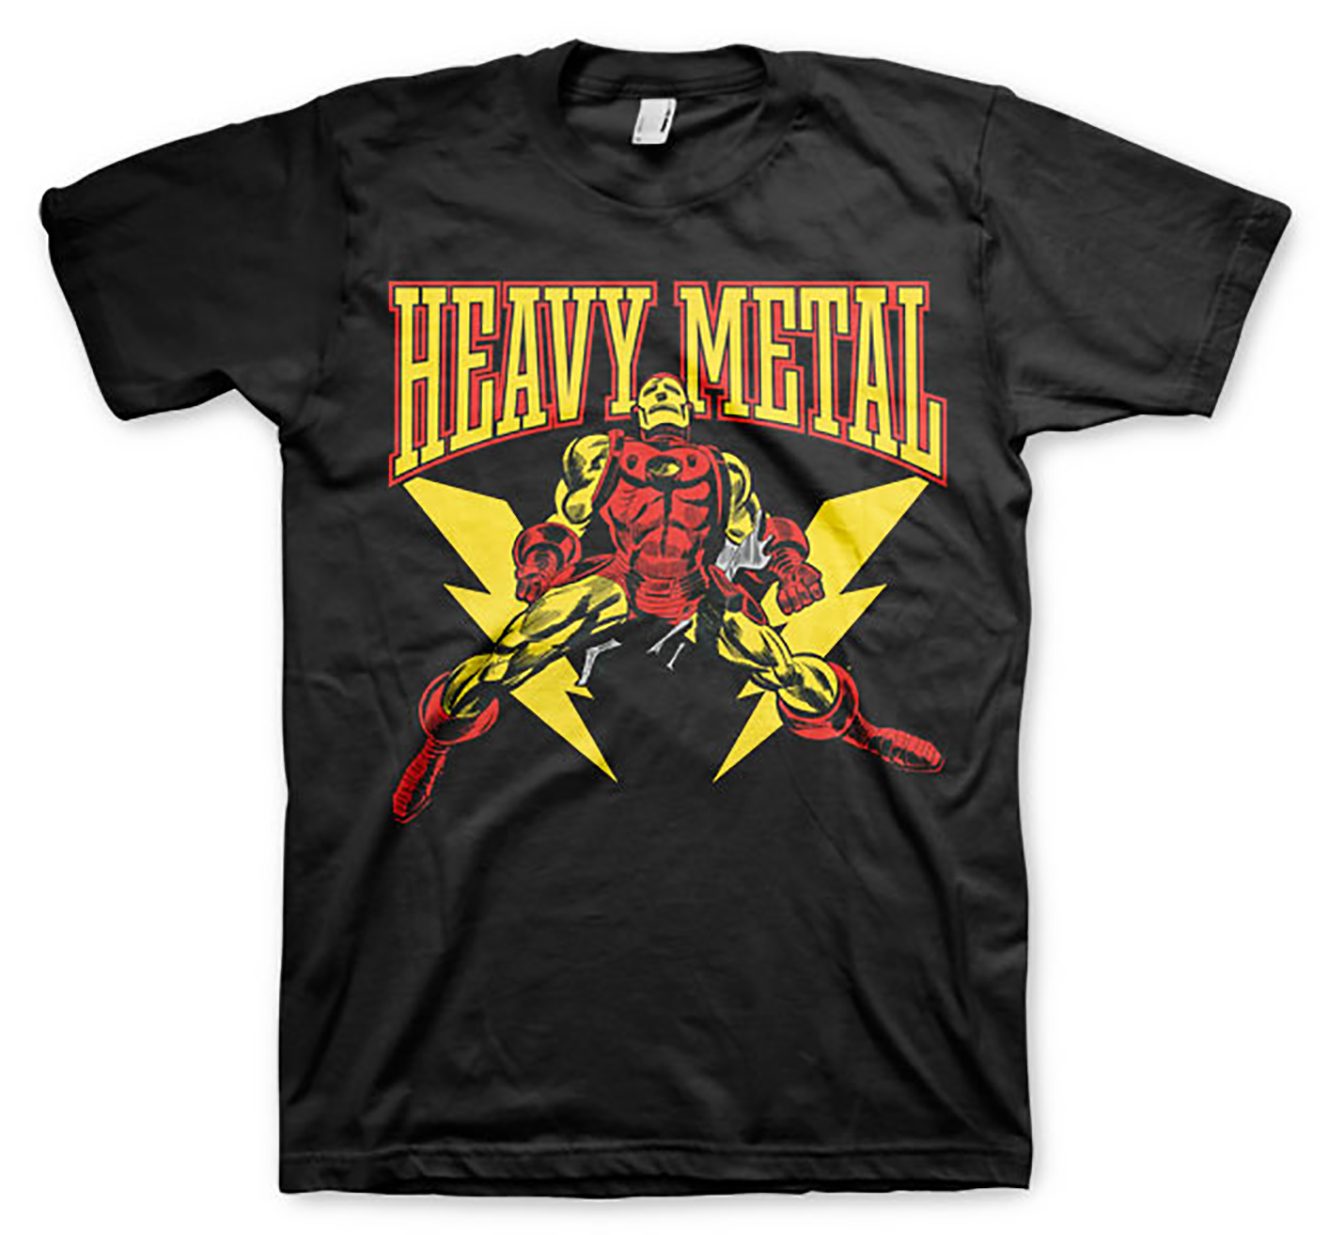 Sort Iron Man Heavy Metal T-shirt